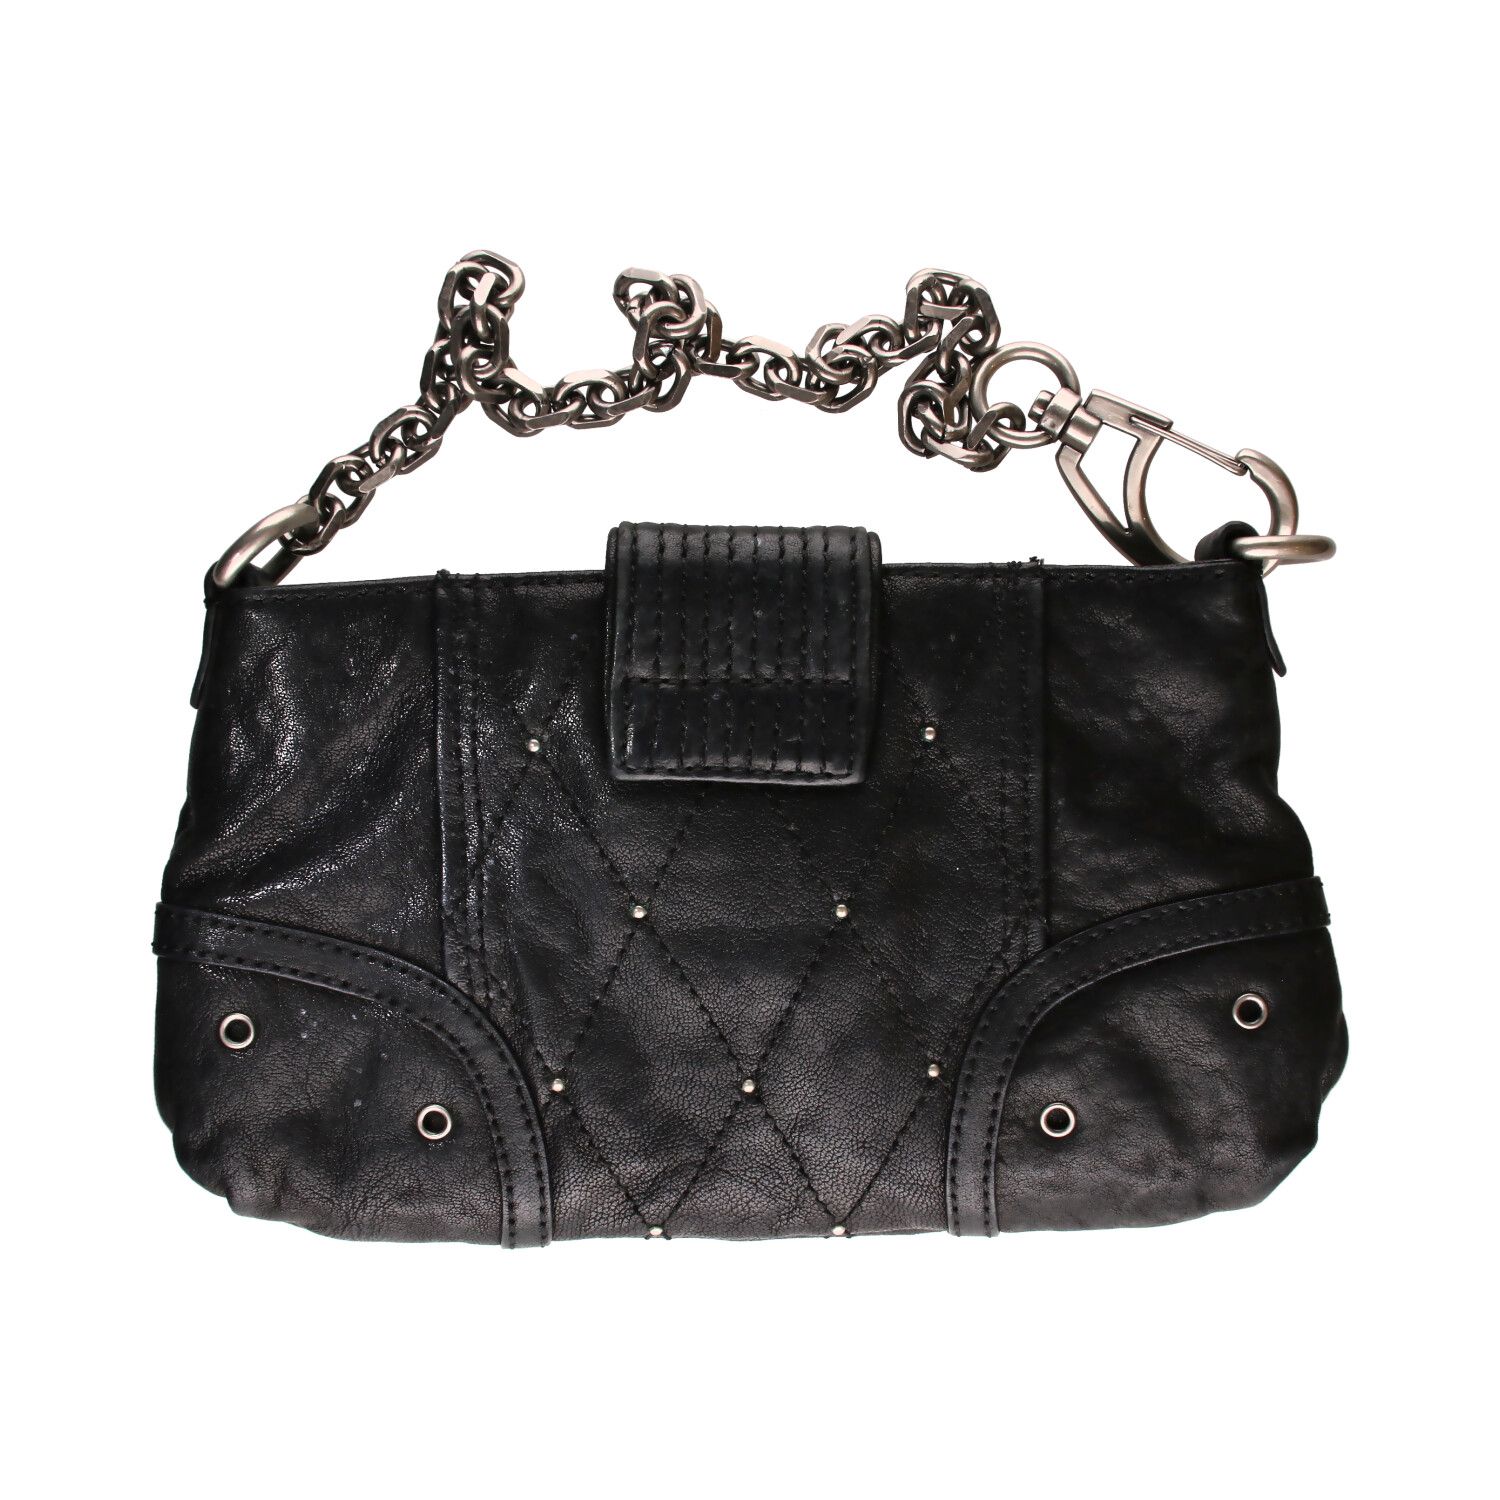 Juicy Couture Love Shoulder Bag in Black | Lyst